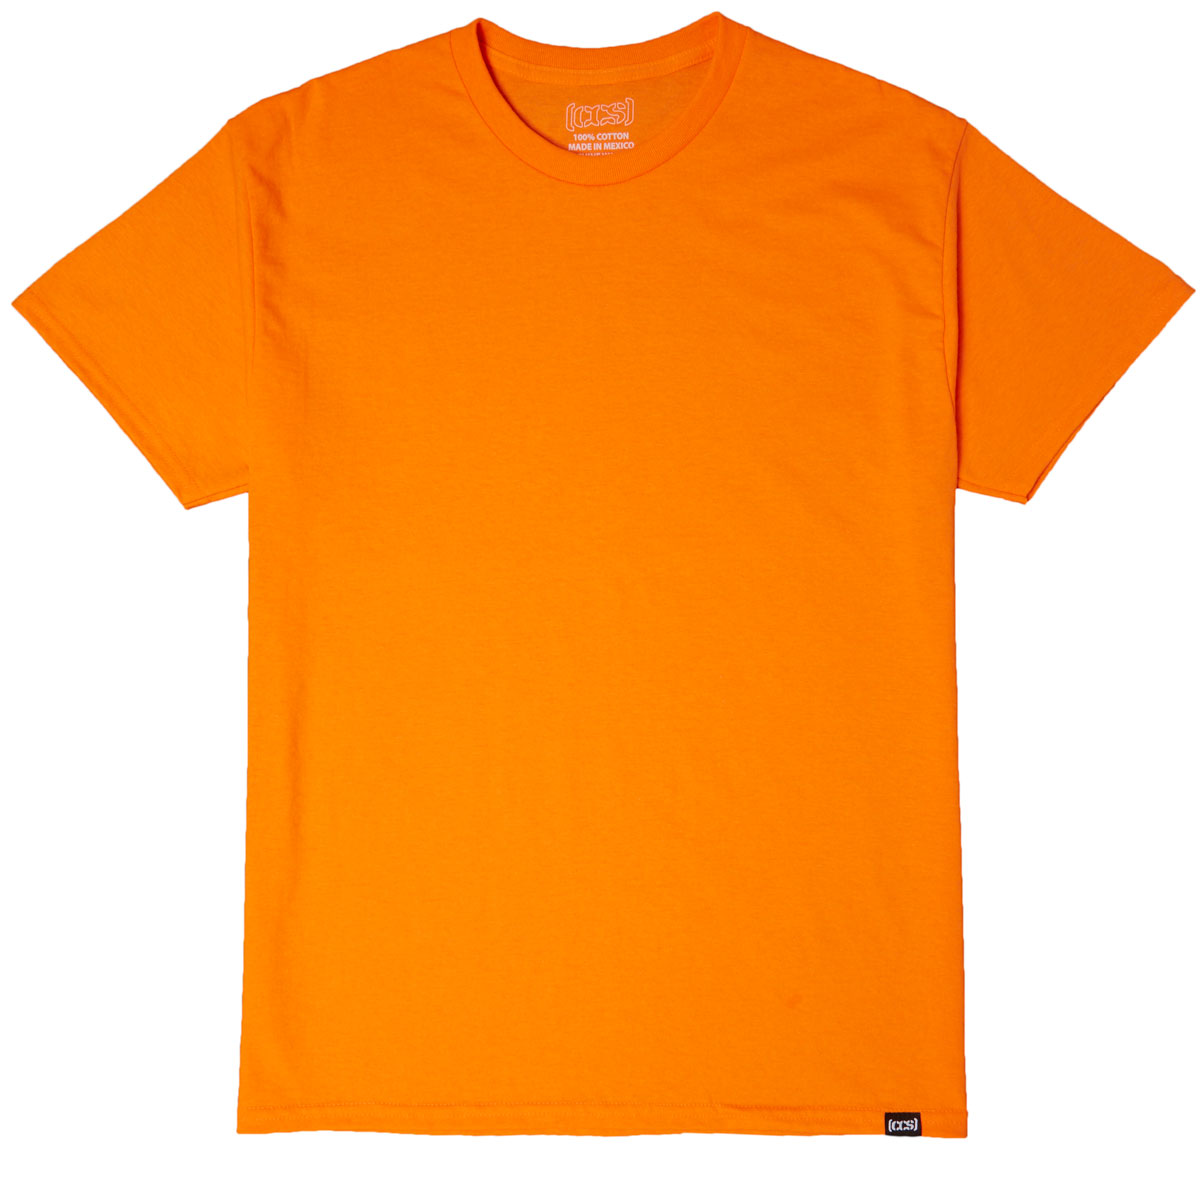 CCS Original Heavyweight T-Shirt - Orange image 1